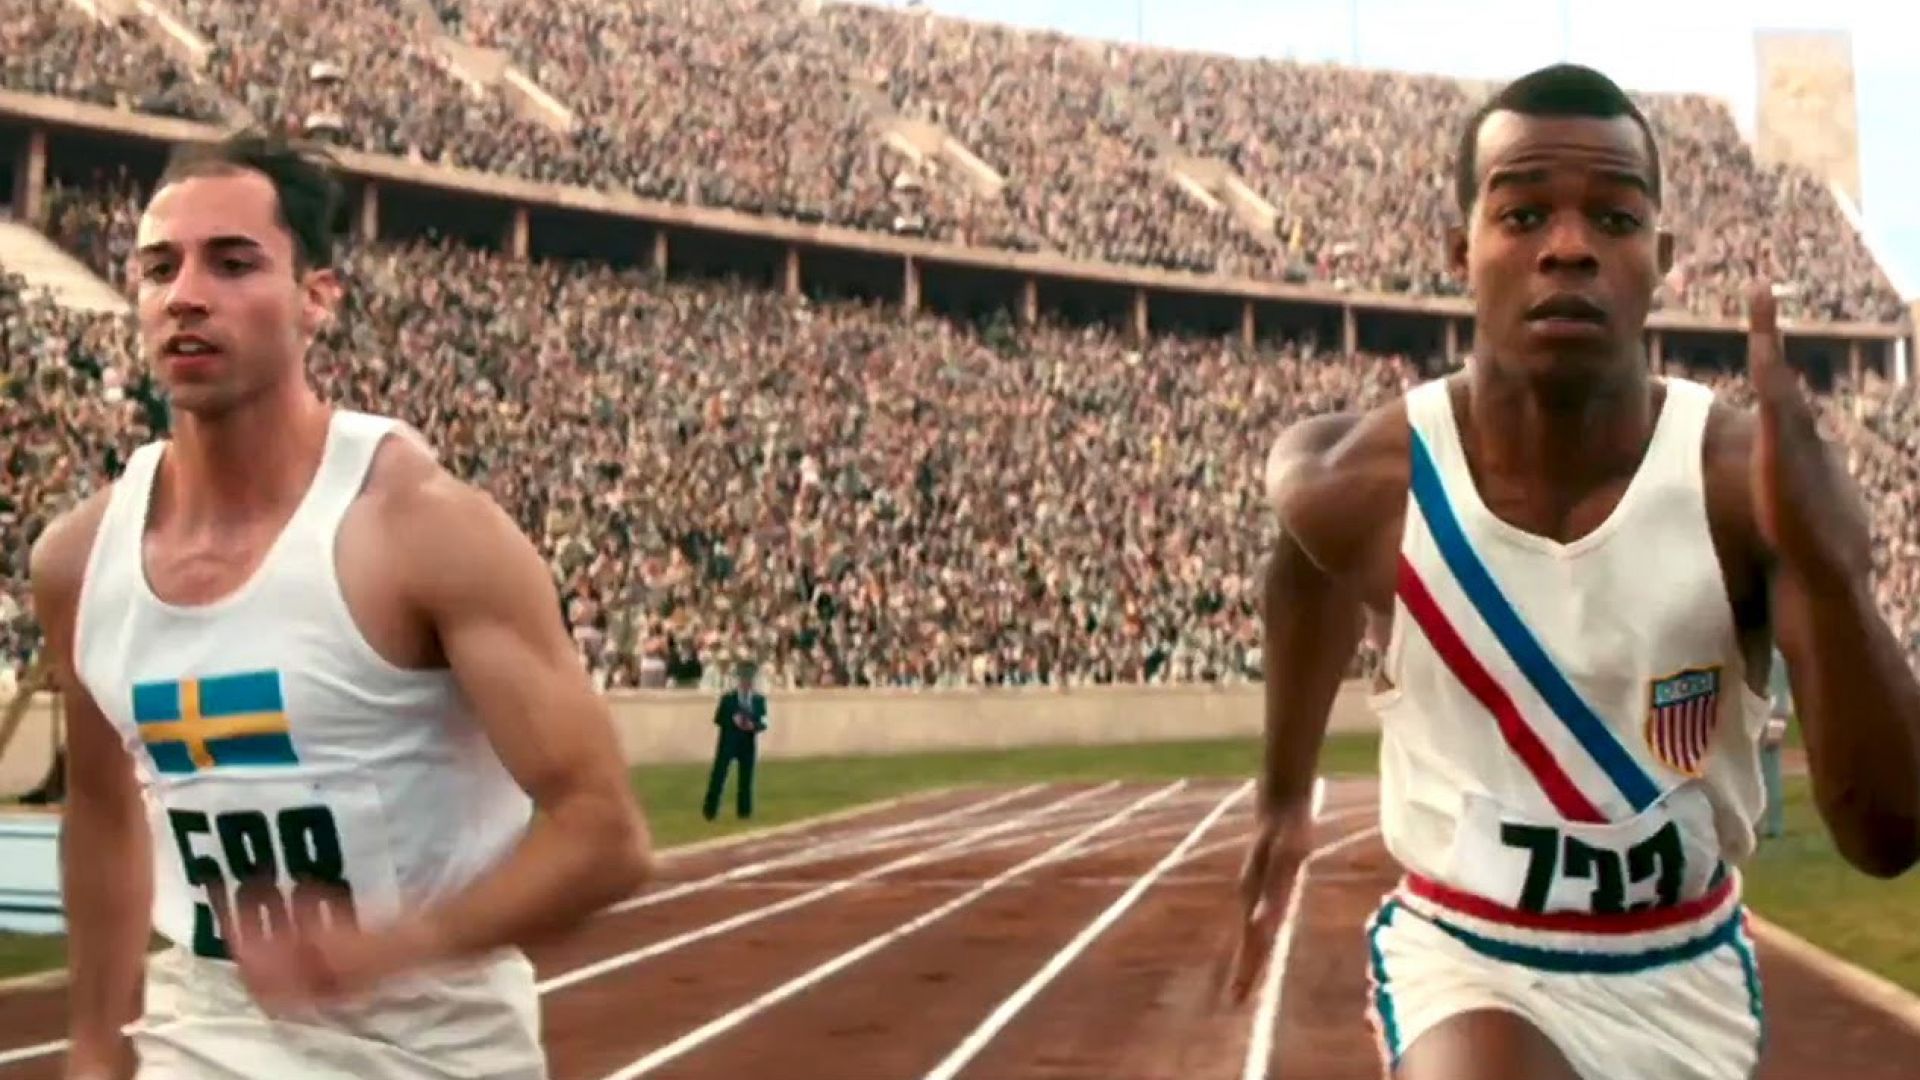 Race Trailer (2016) A Jesse Owens biopic.